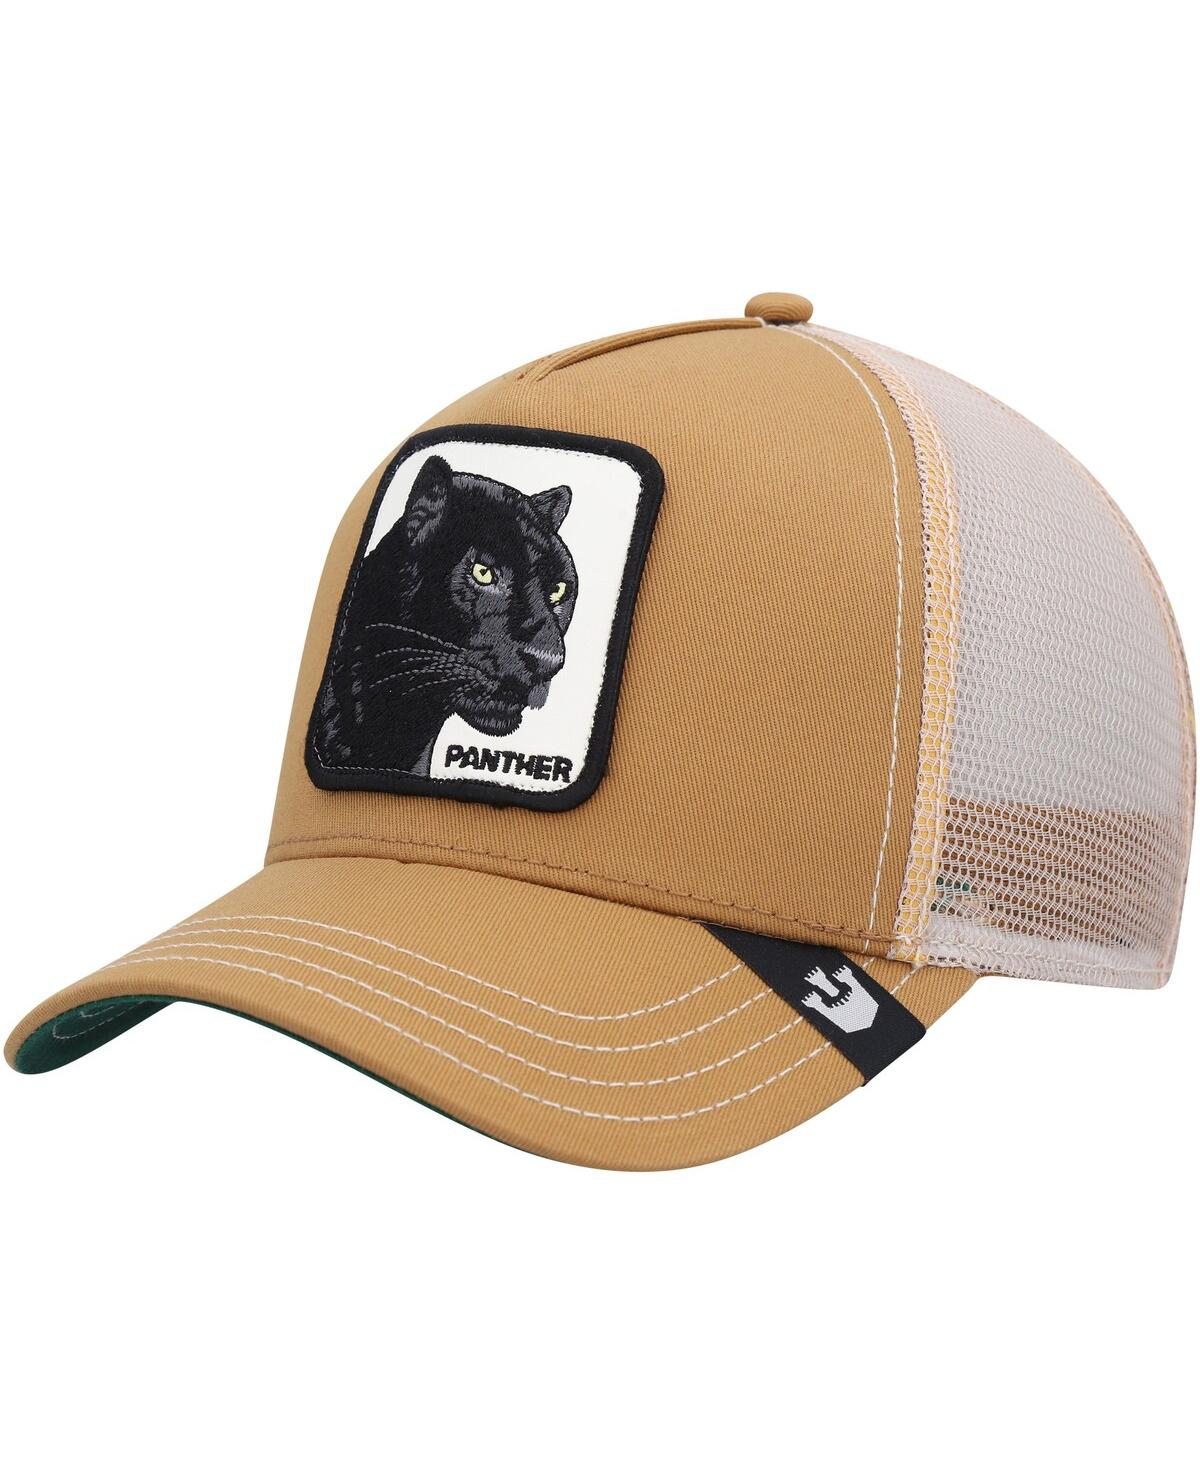 Goorin Bros Men's . Khaki The Panther Trucker Adjustable Hat